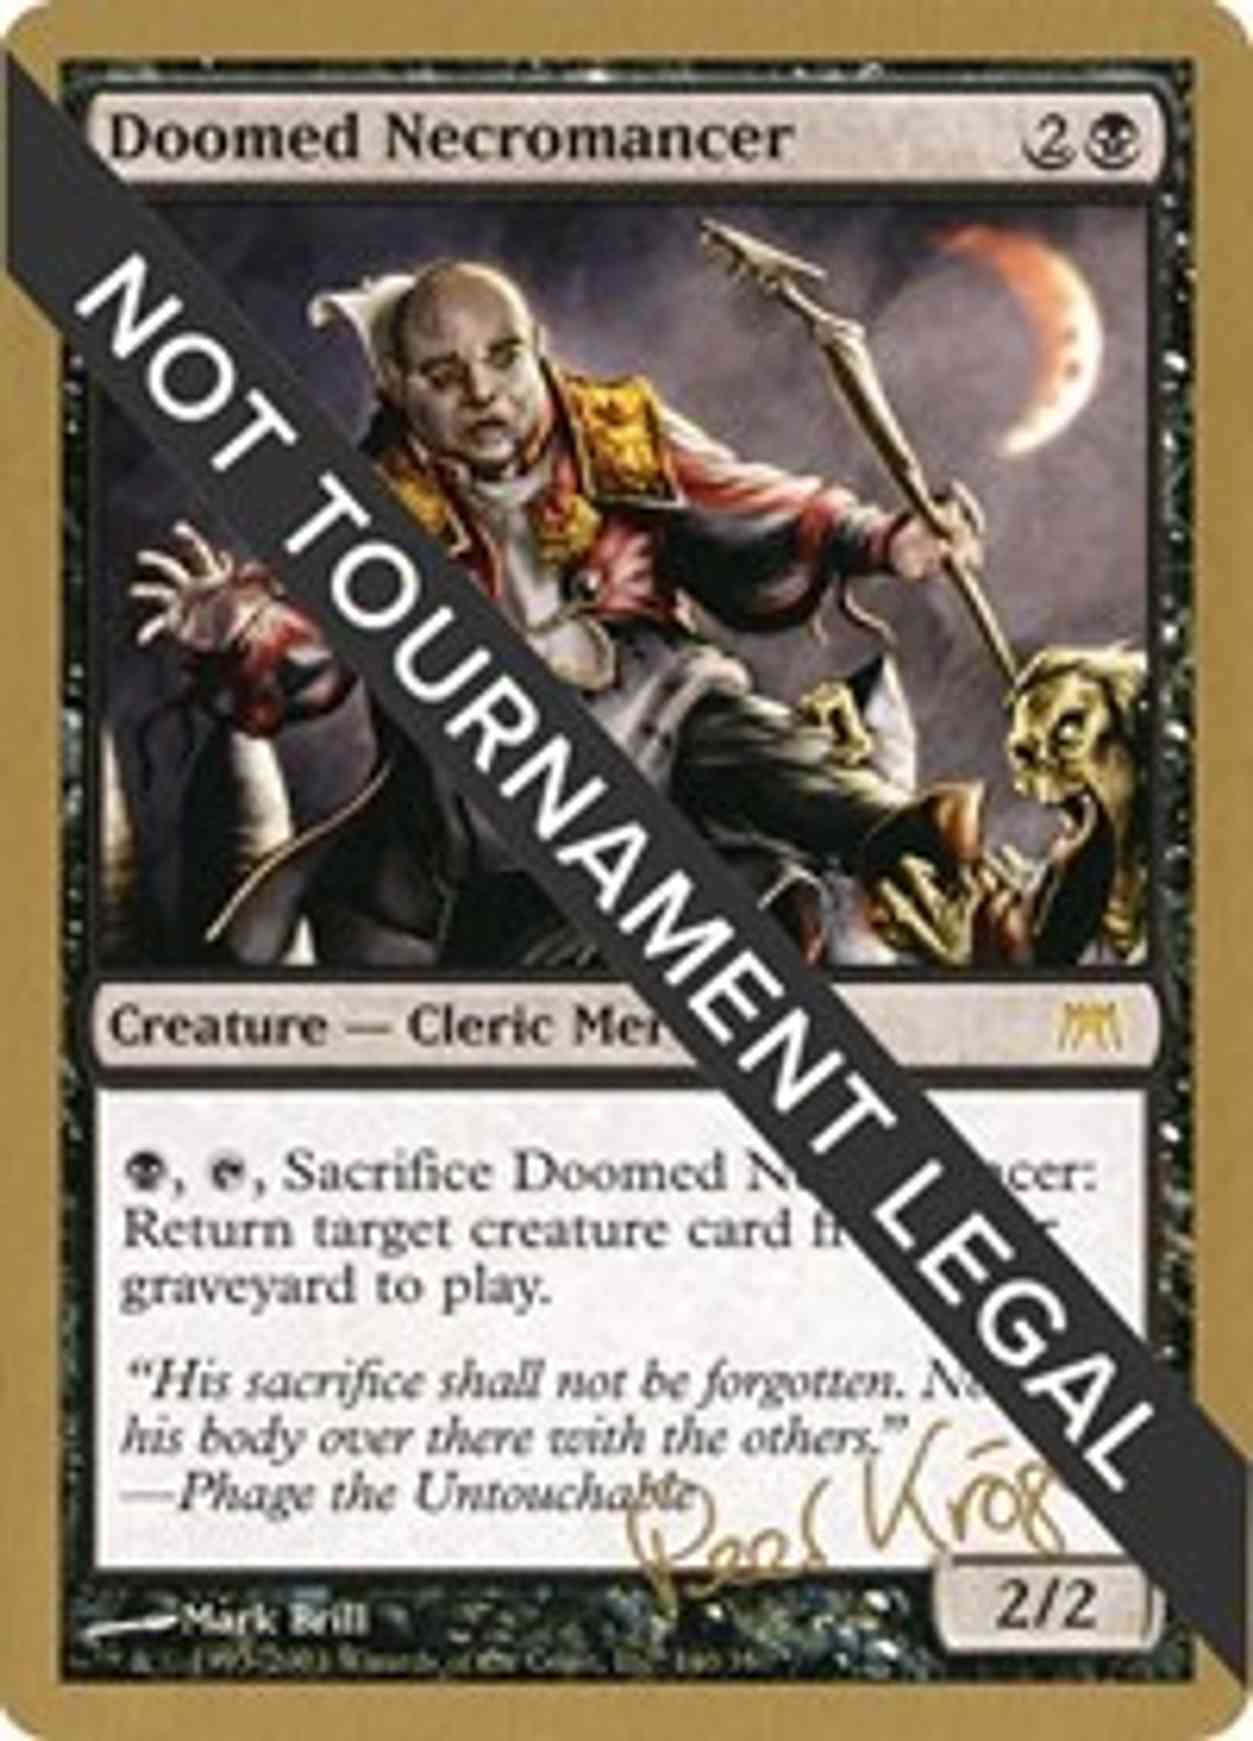 Doomed Necromancer - 2003 Peer Kroger (ONS) magic card front